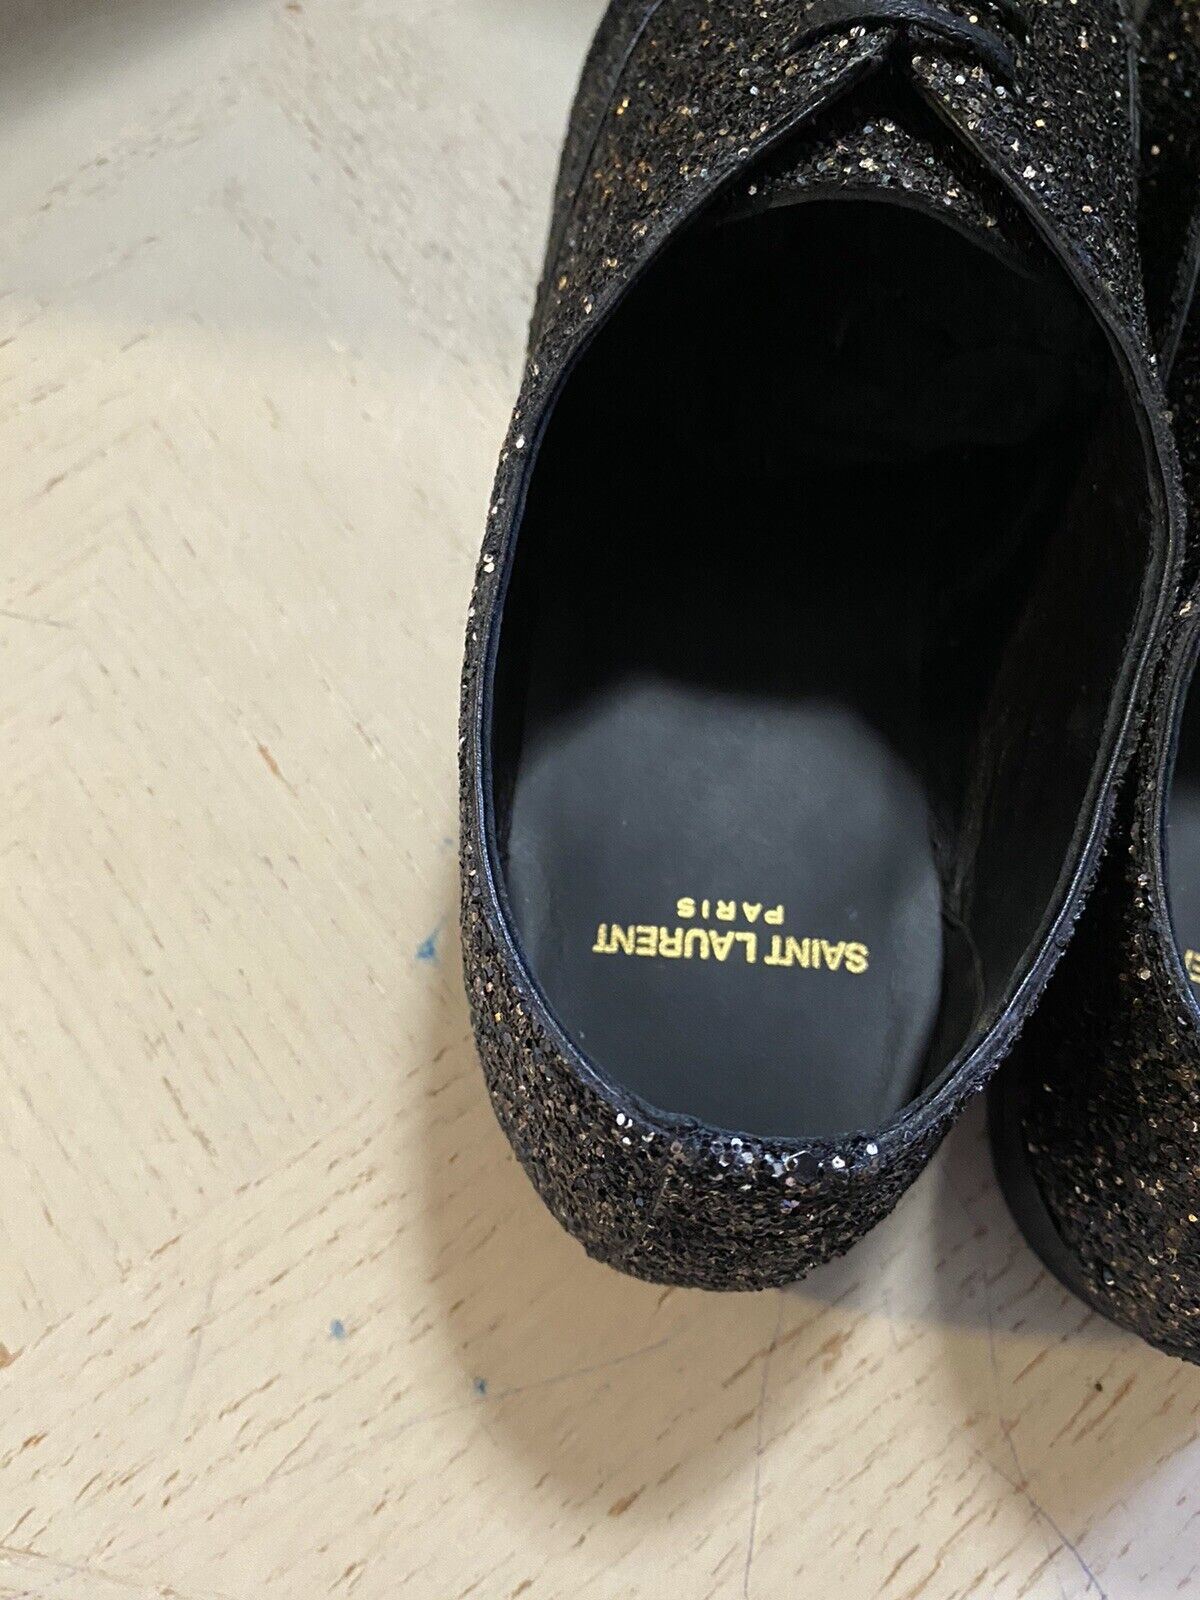 NIB $1095 Saint Laurent Men Glitter Midnight Leather Shoes Black/Gold 10.5 US/